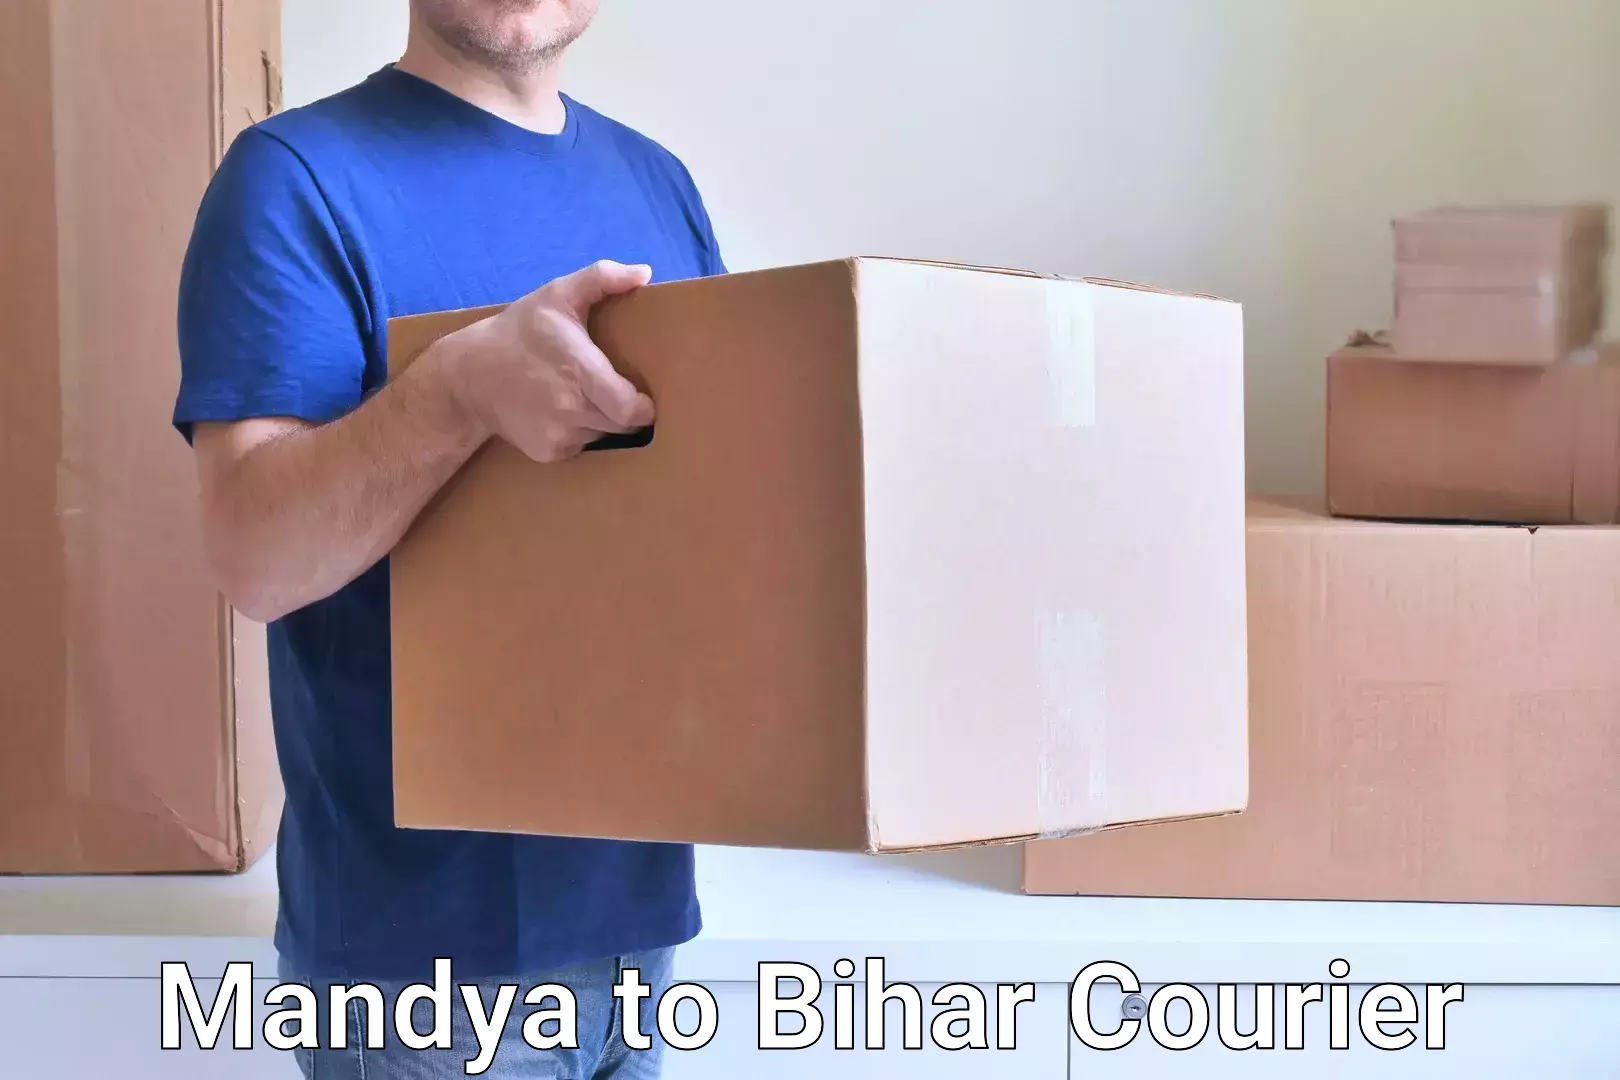 Business delivery service Mandya to Bihar